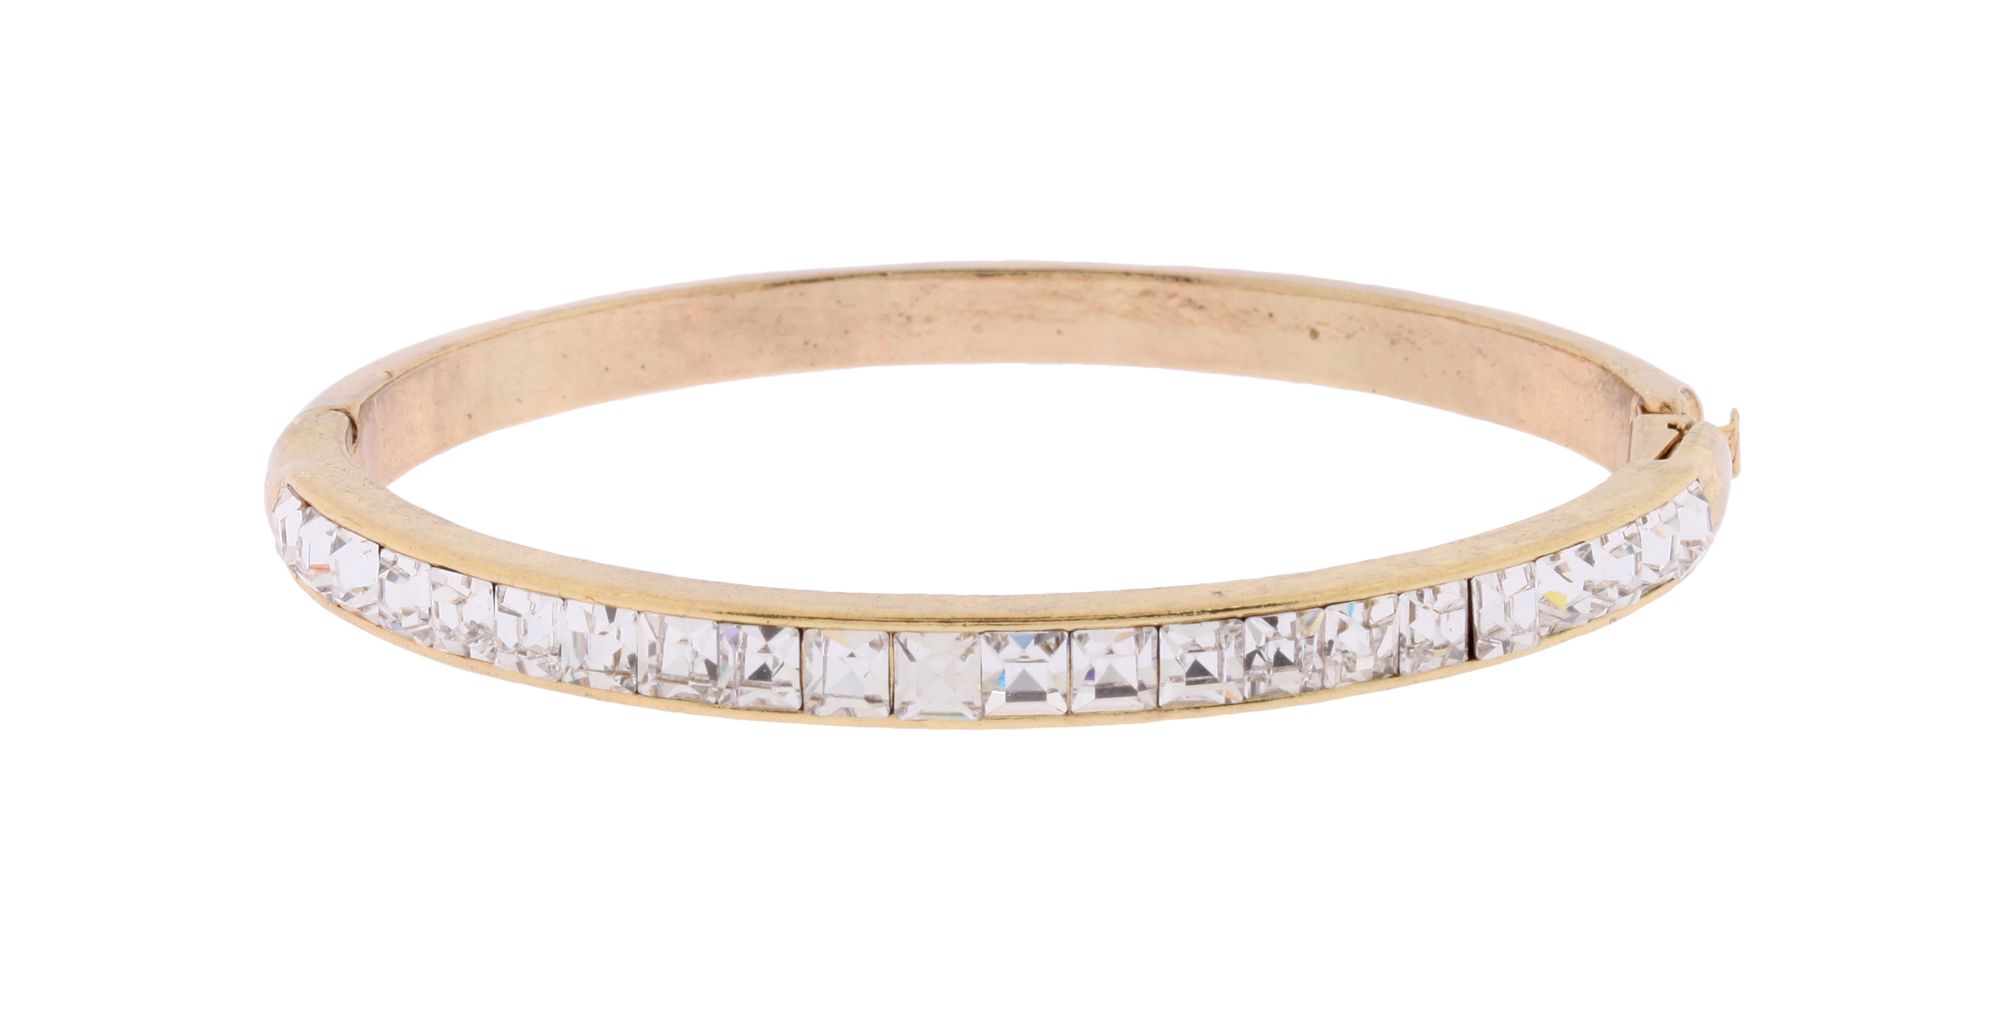 Martine Wester Speakeasy Crystal Cuff Bracelet in Gold | Lyst